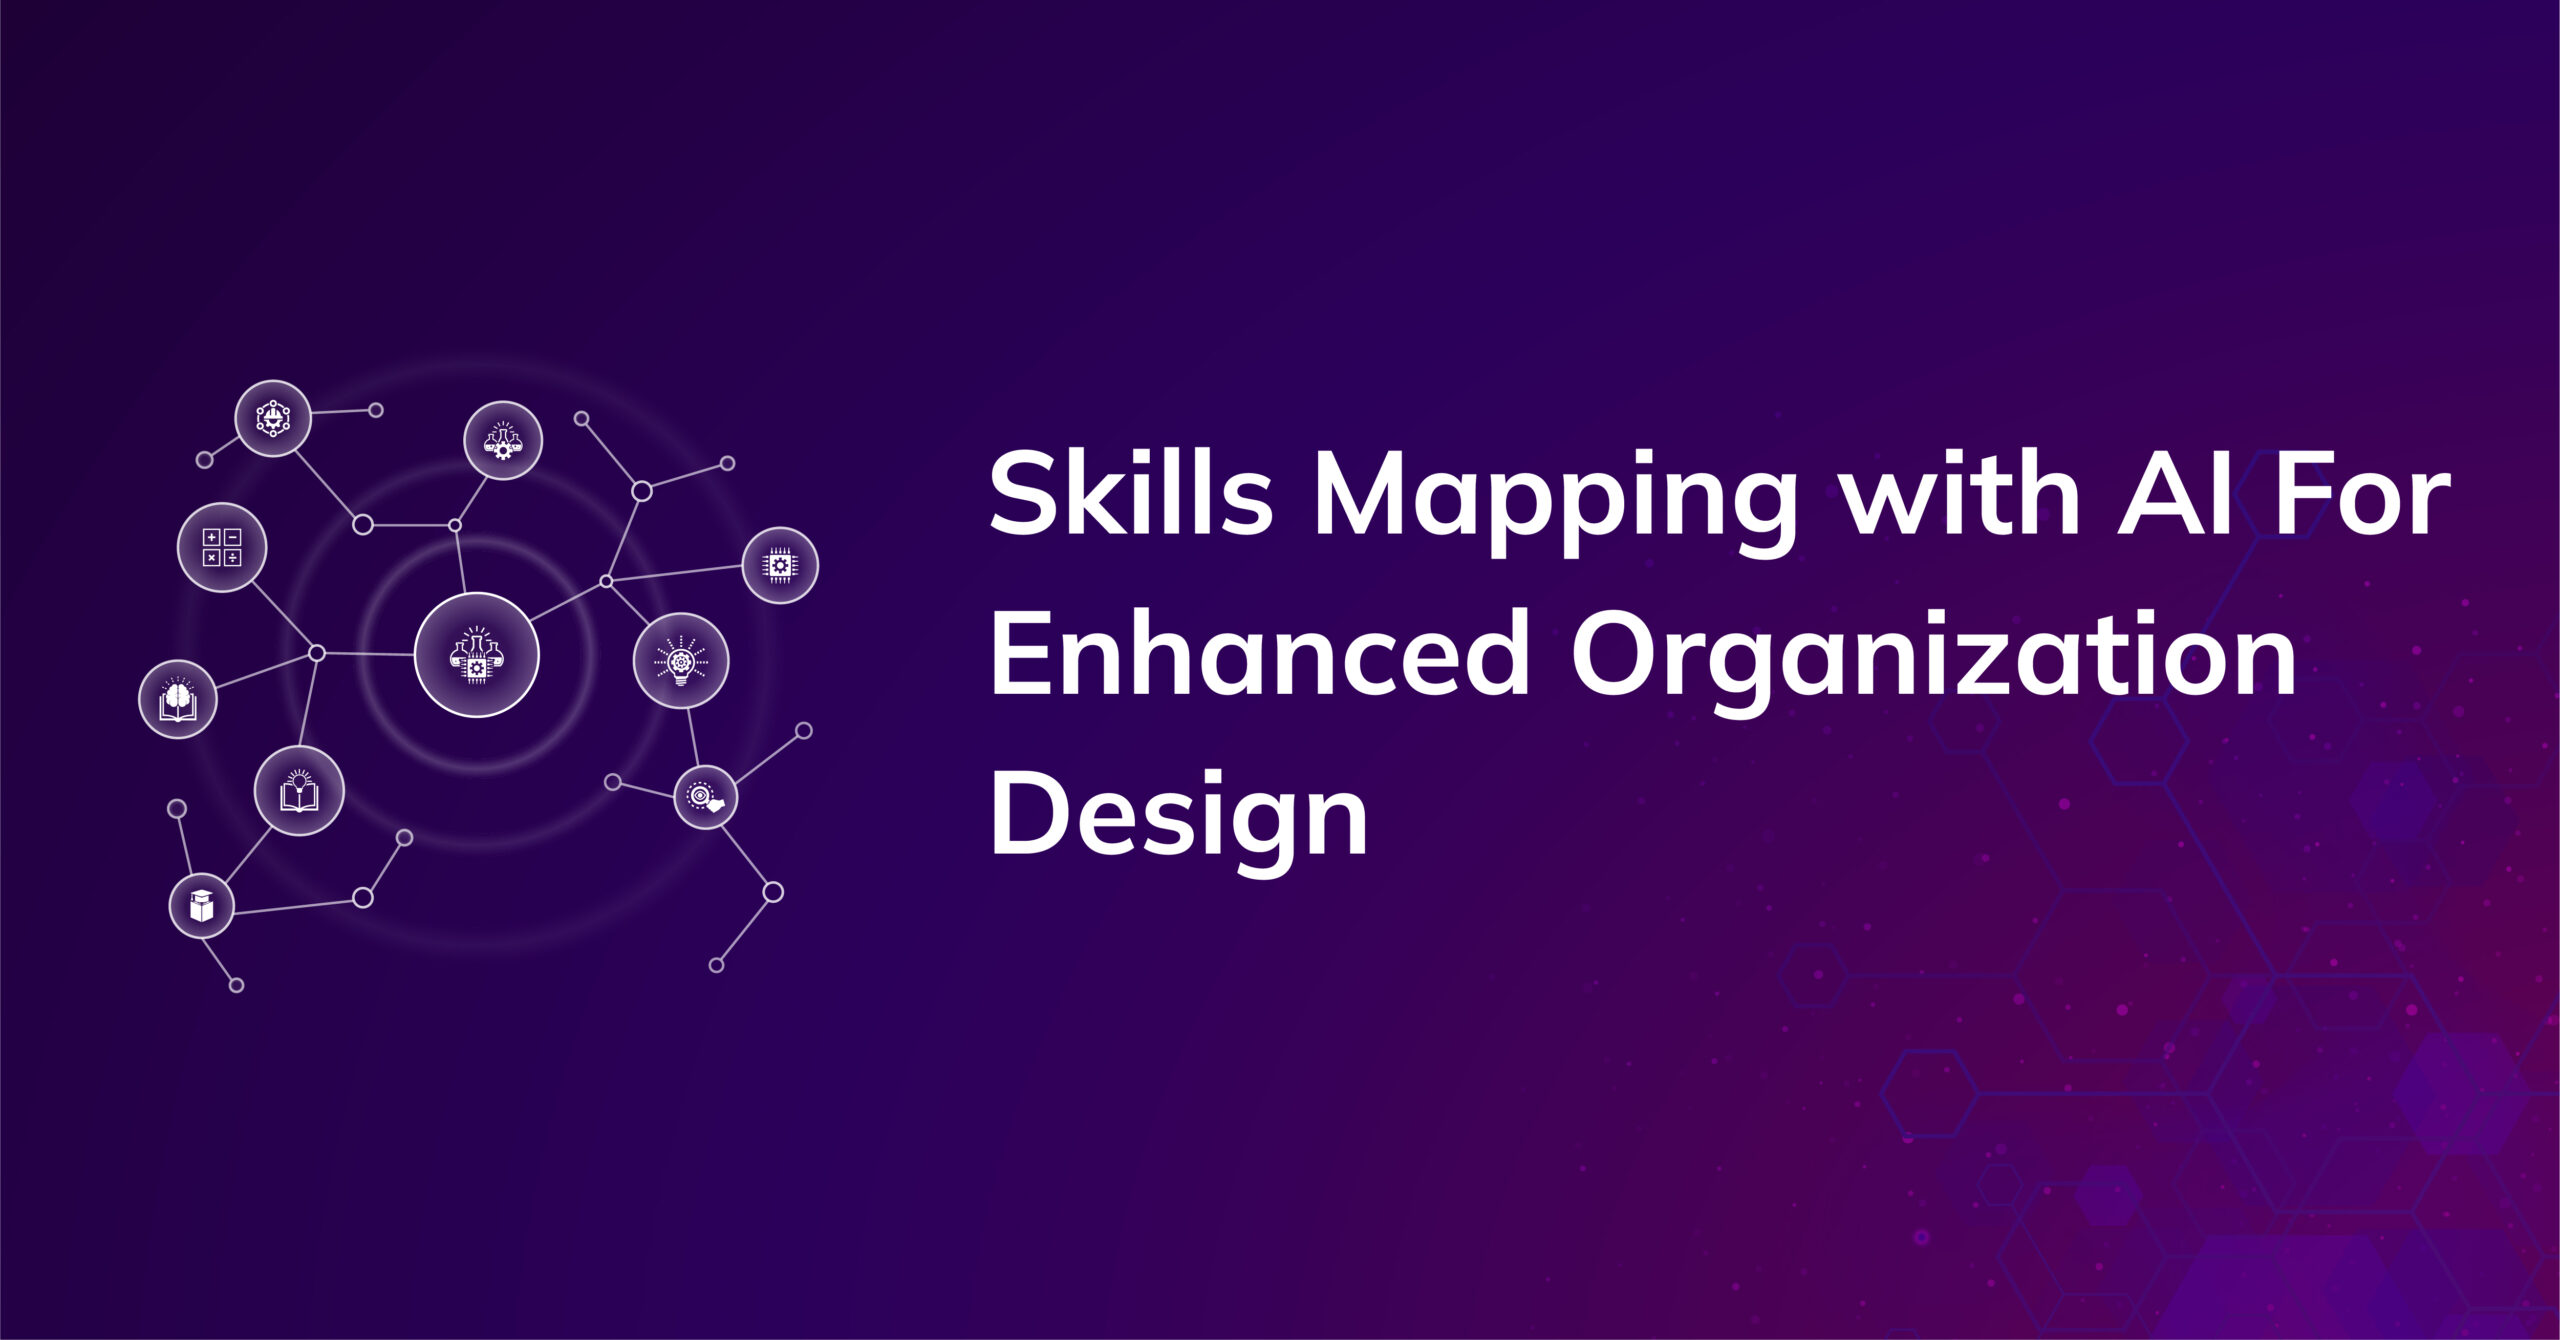 Revolutionizing Organization Design: AI and the Future of Skills Mapping